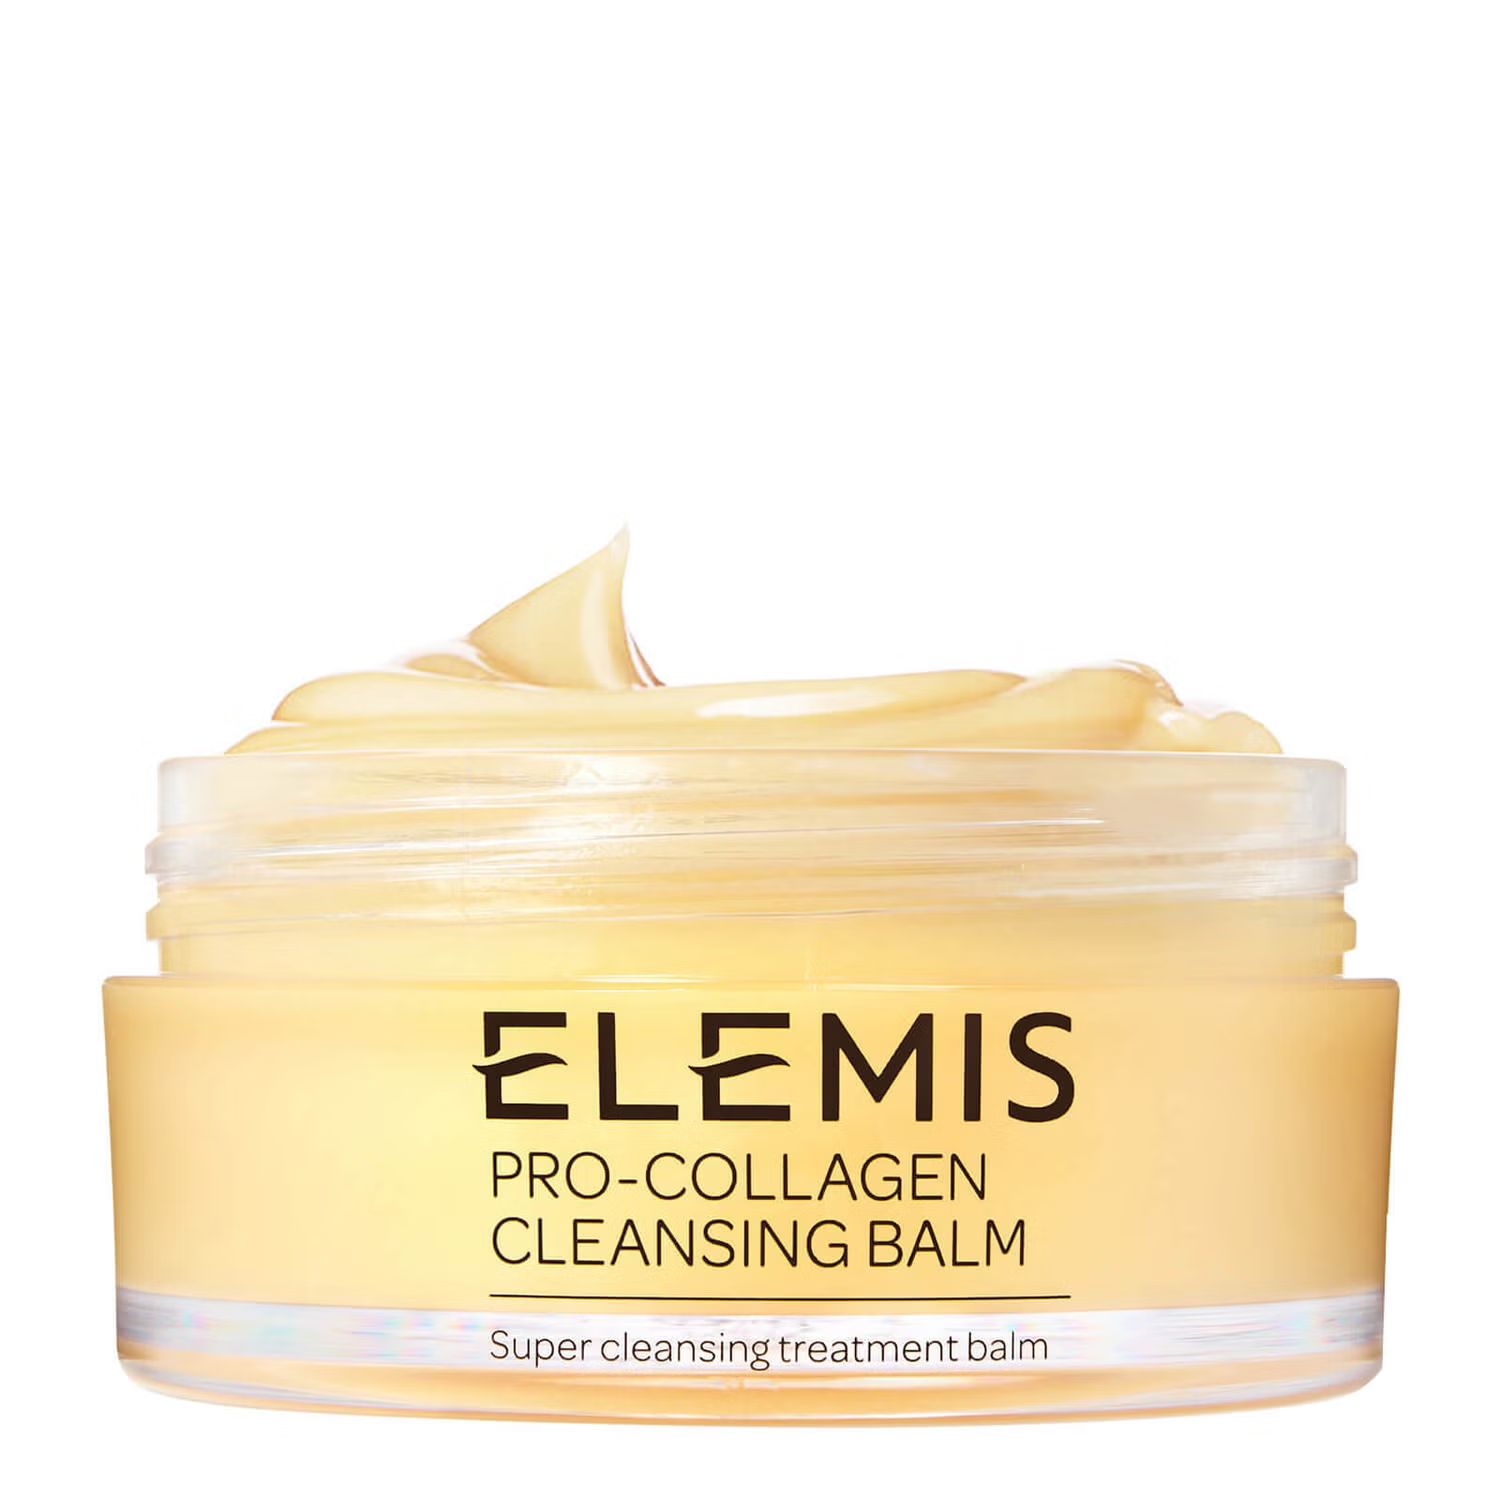 Elemis Pro-Collagen Cleansing Balm 100g | Skinstore